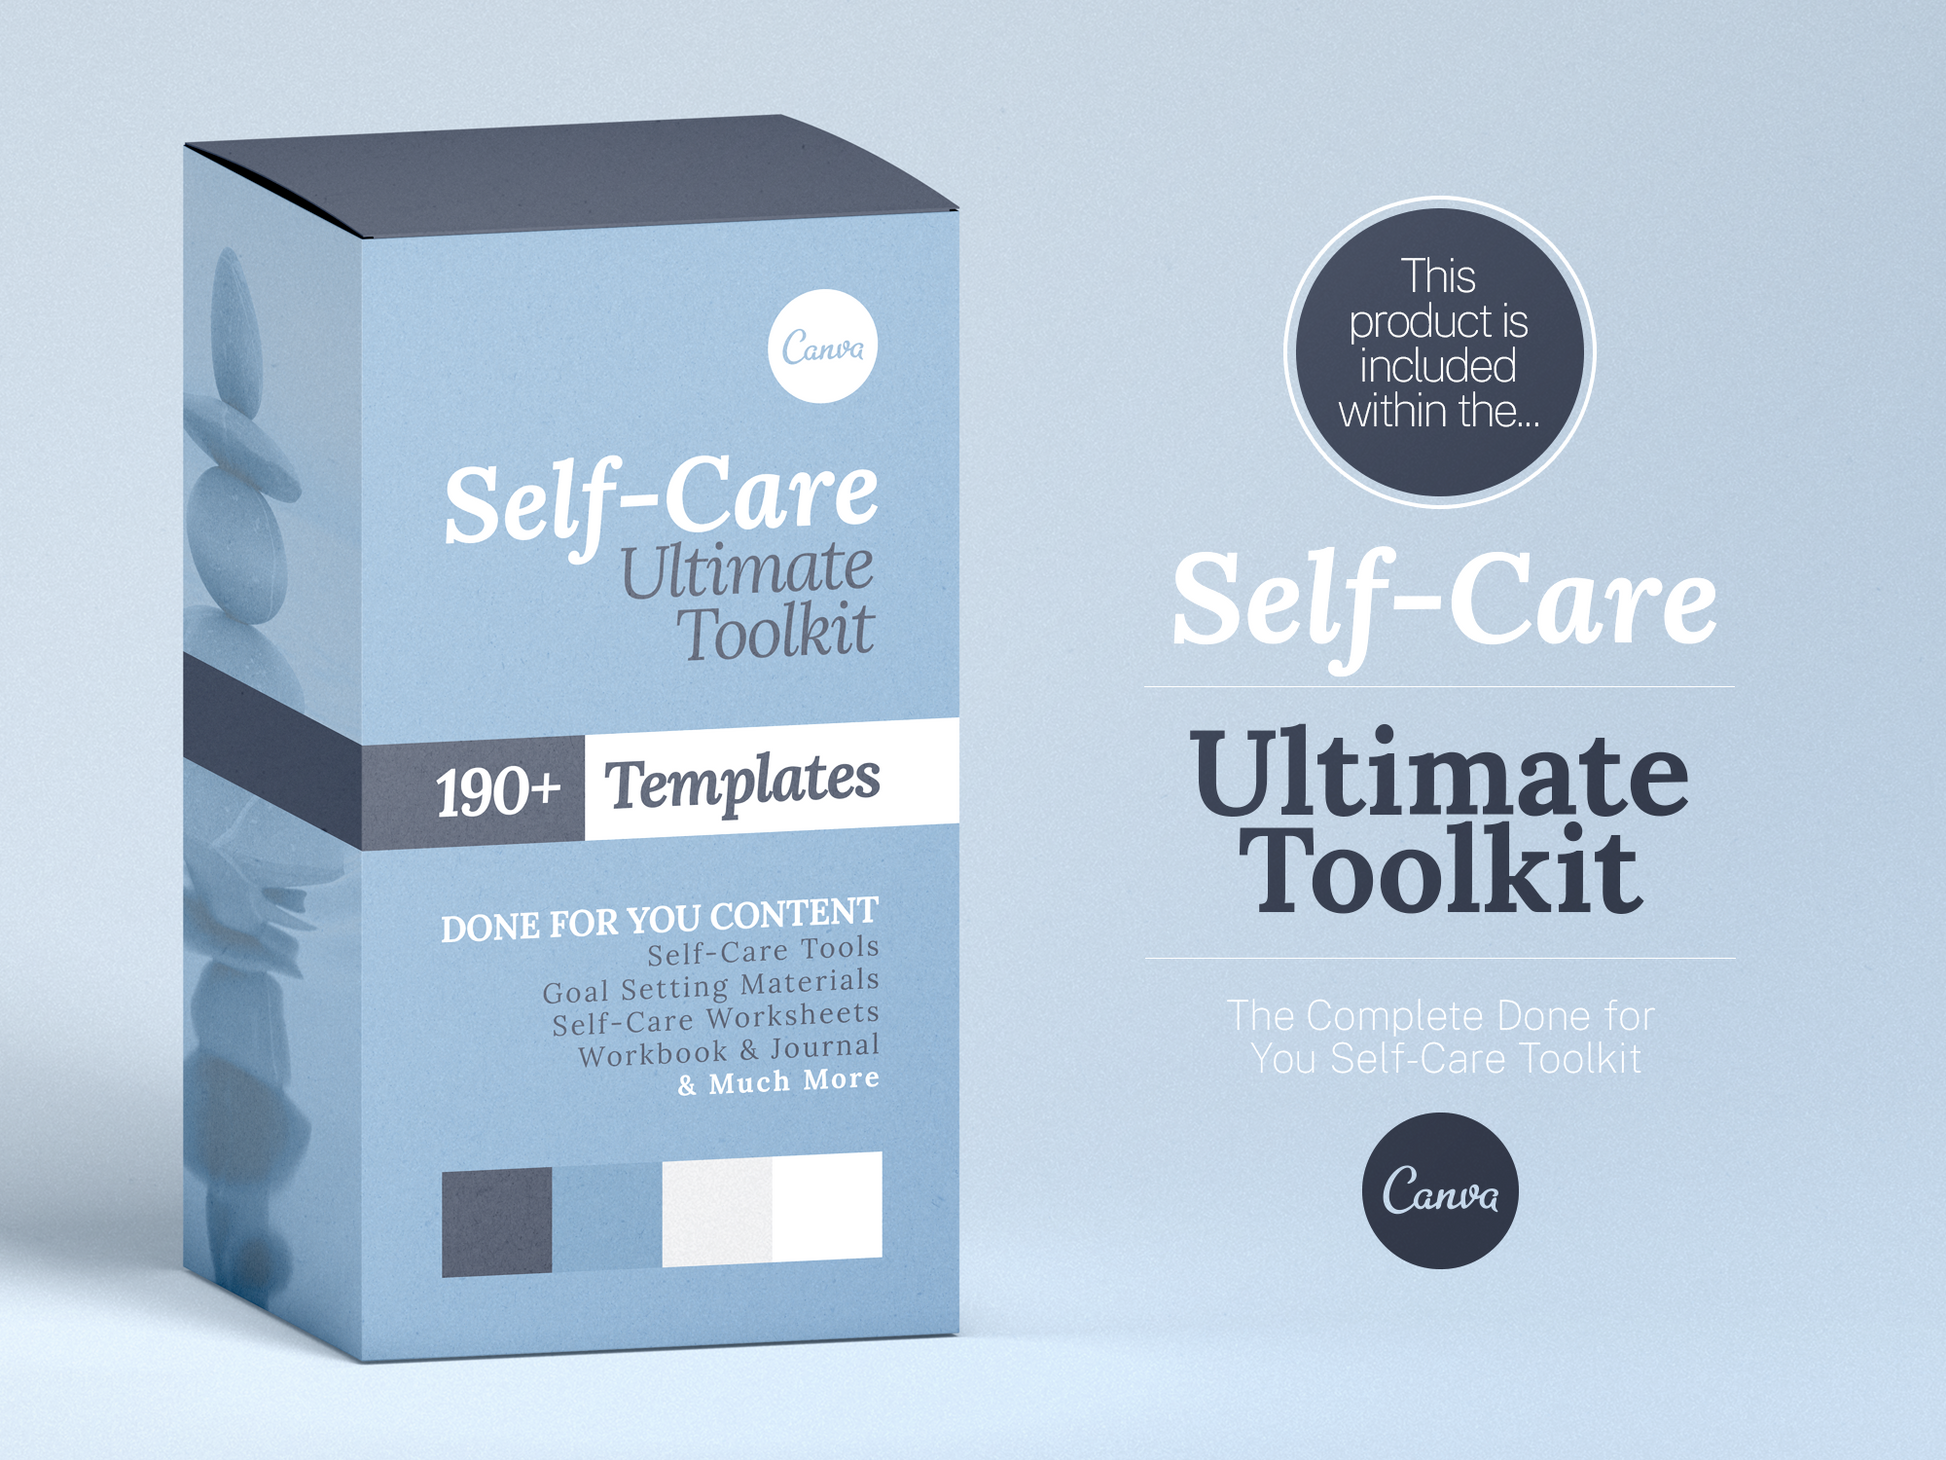 Self-Care Worksheets & Trackers (Denim)